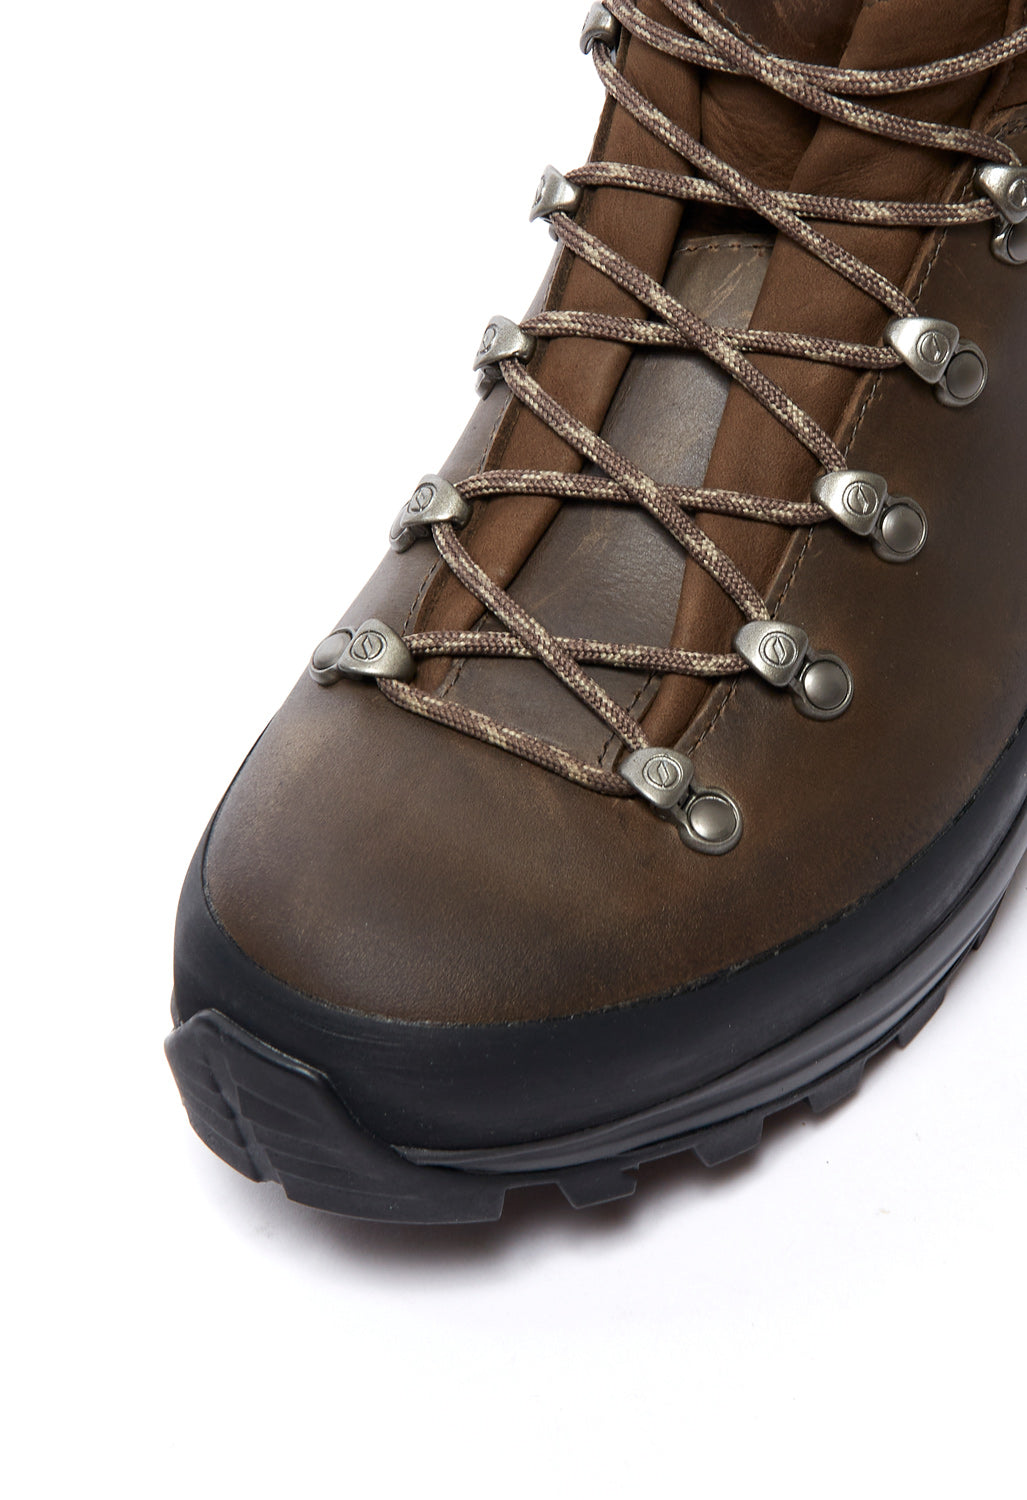 Scarpa Trek LV GORE-TEX Men's Boots - Brown